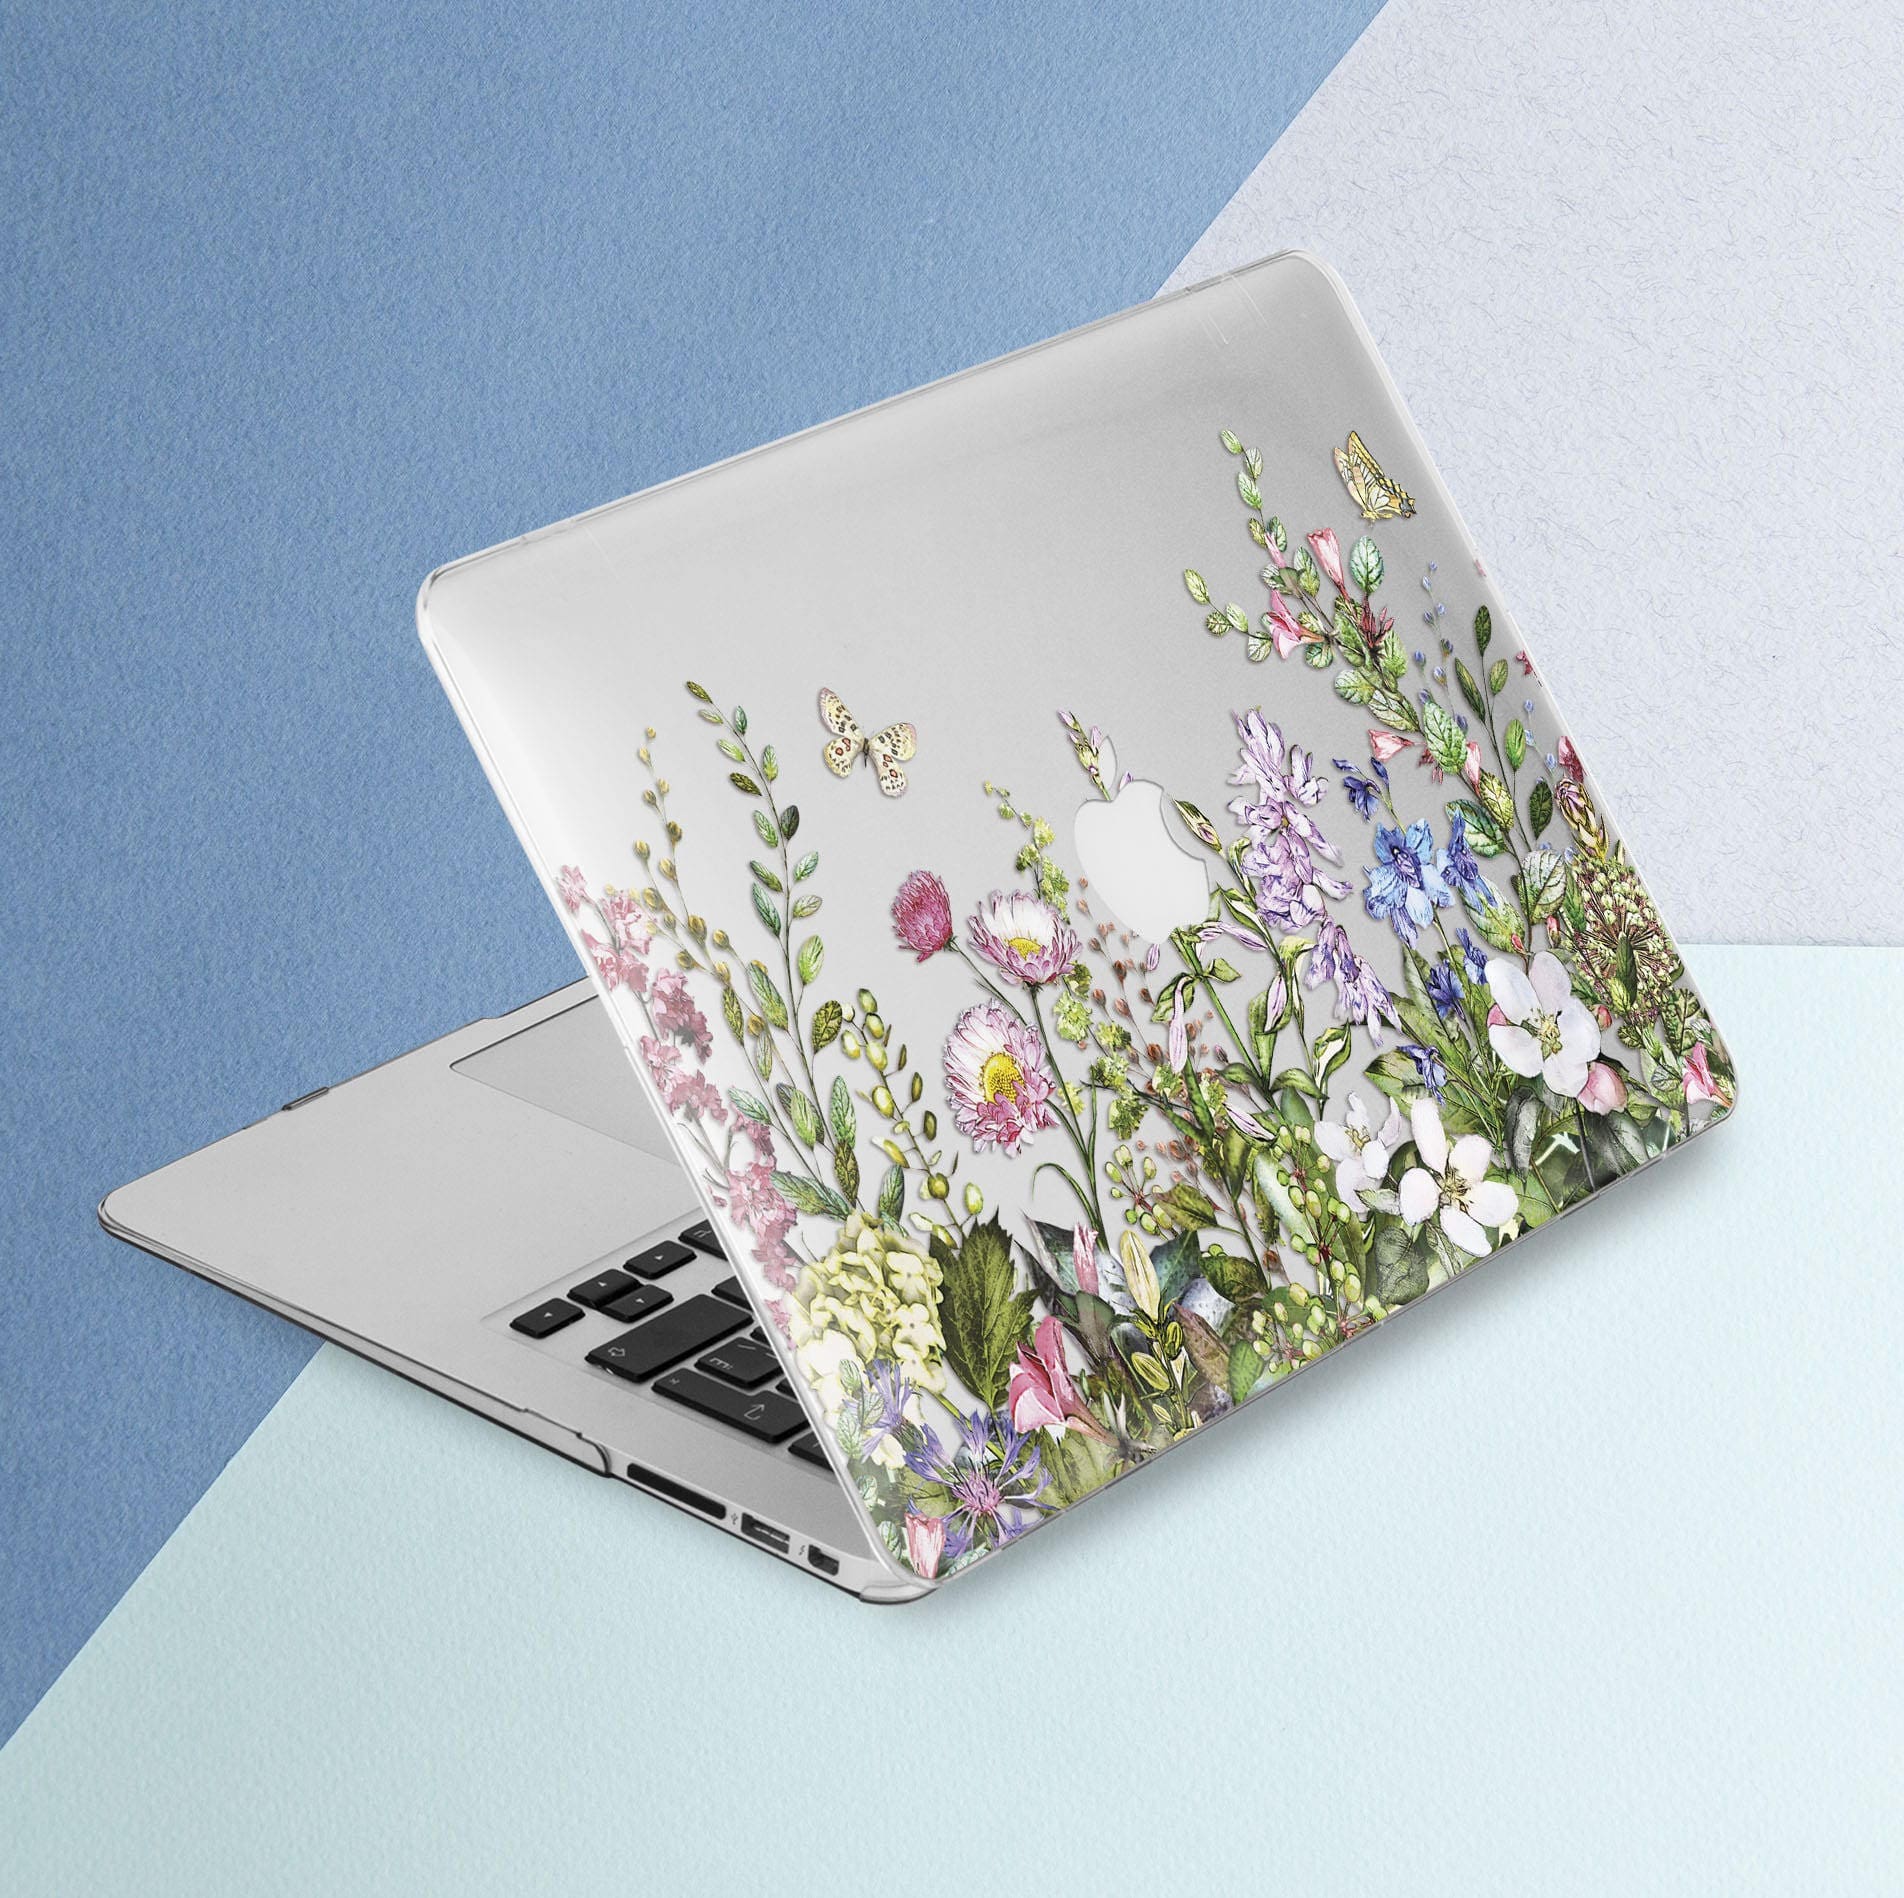 Hard Plastic Macbook 12 Air 11 Floral Case Flower Macbook Pro 13 Retina 15 Skin 